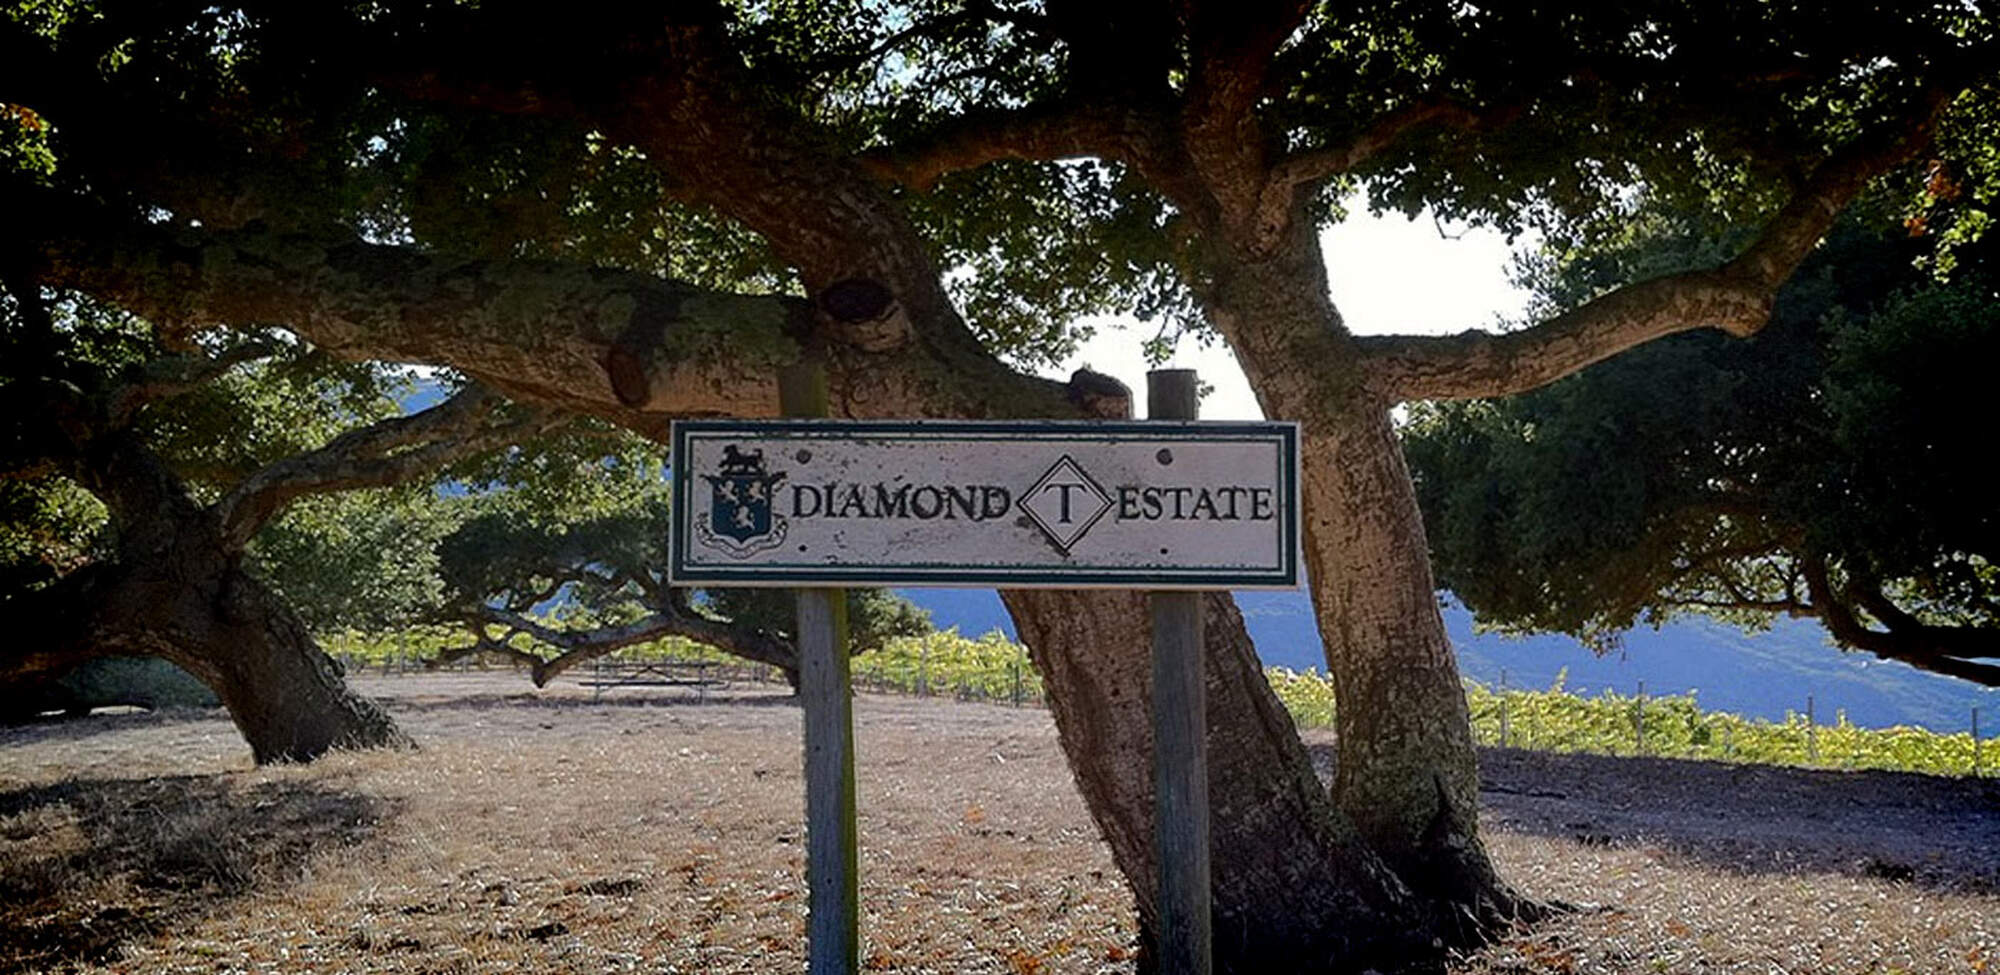 Diamond T Tree in the vineyard